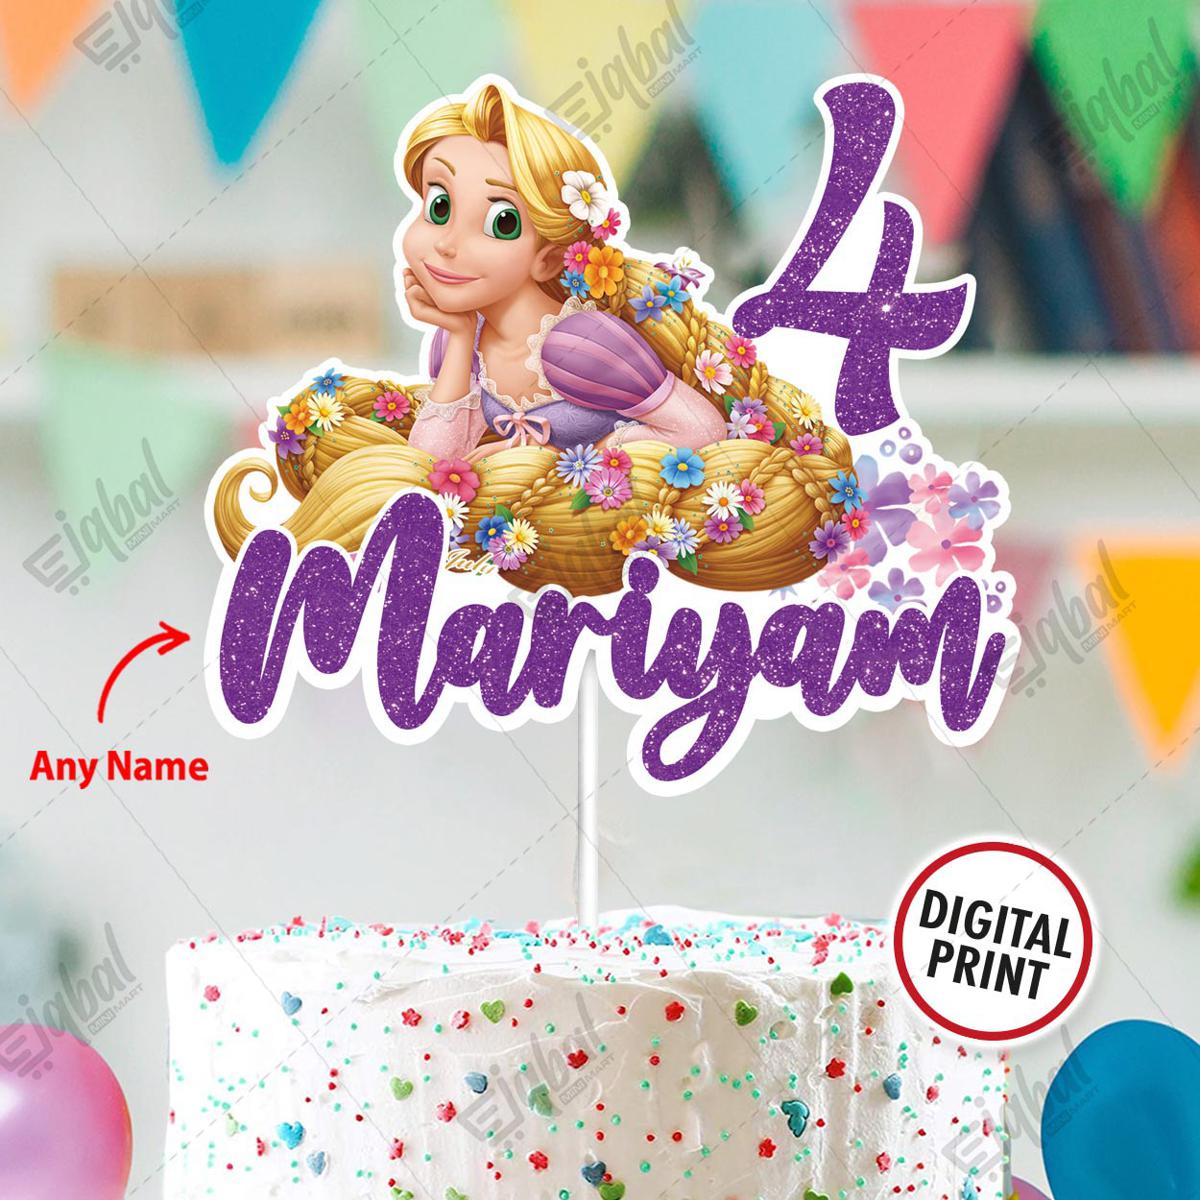 Happy Birthday Diya Vancho in Barbie... - The Kanchi's Cake | Facebook